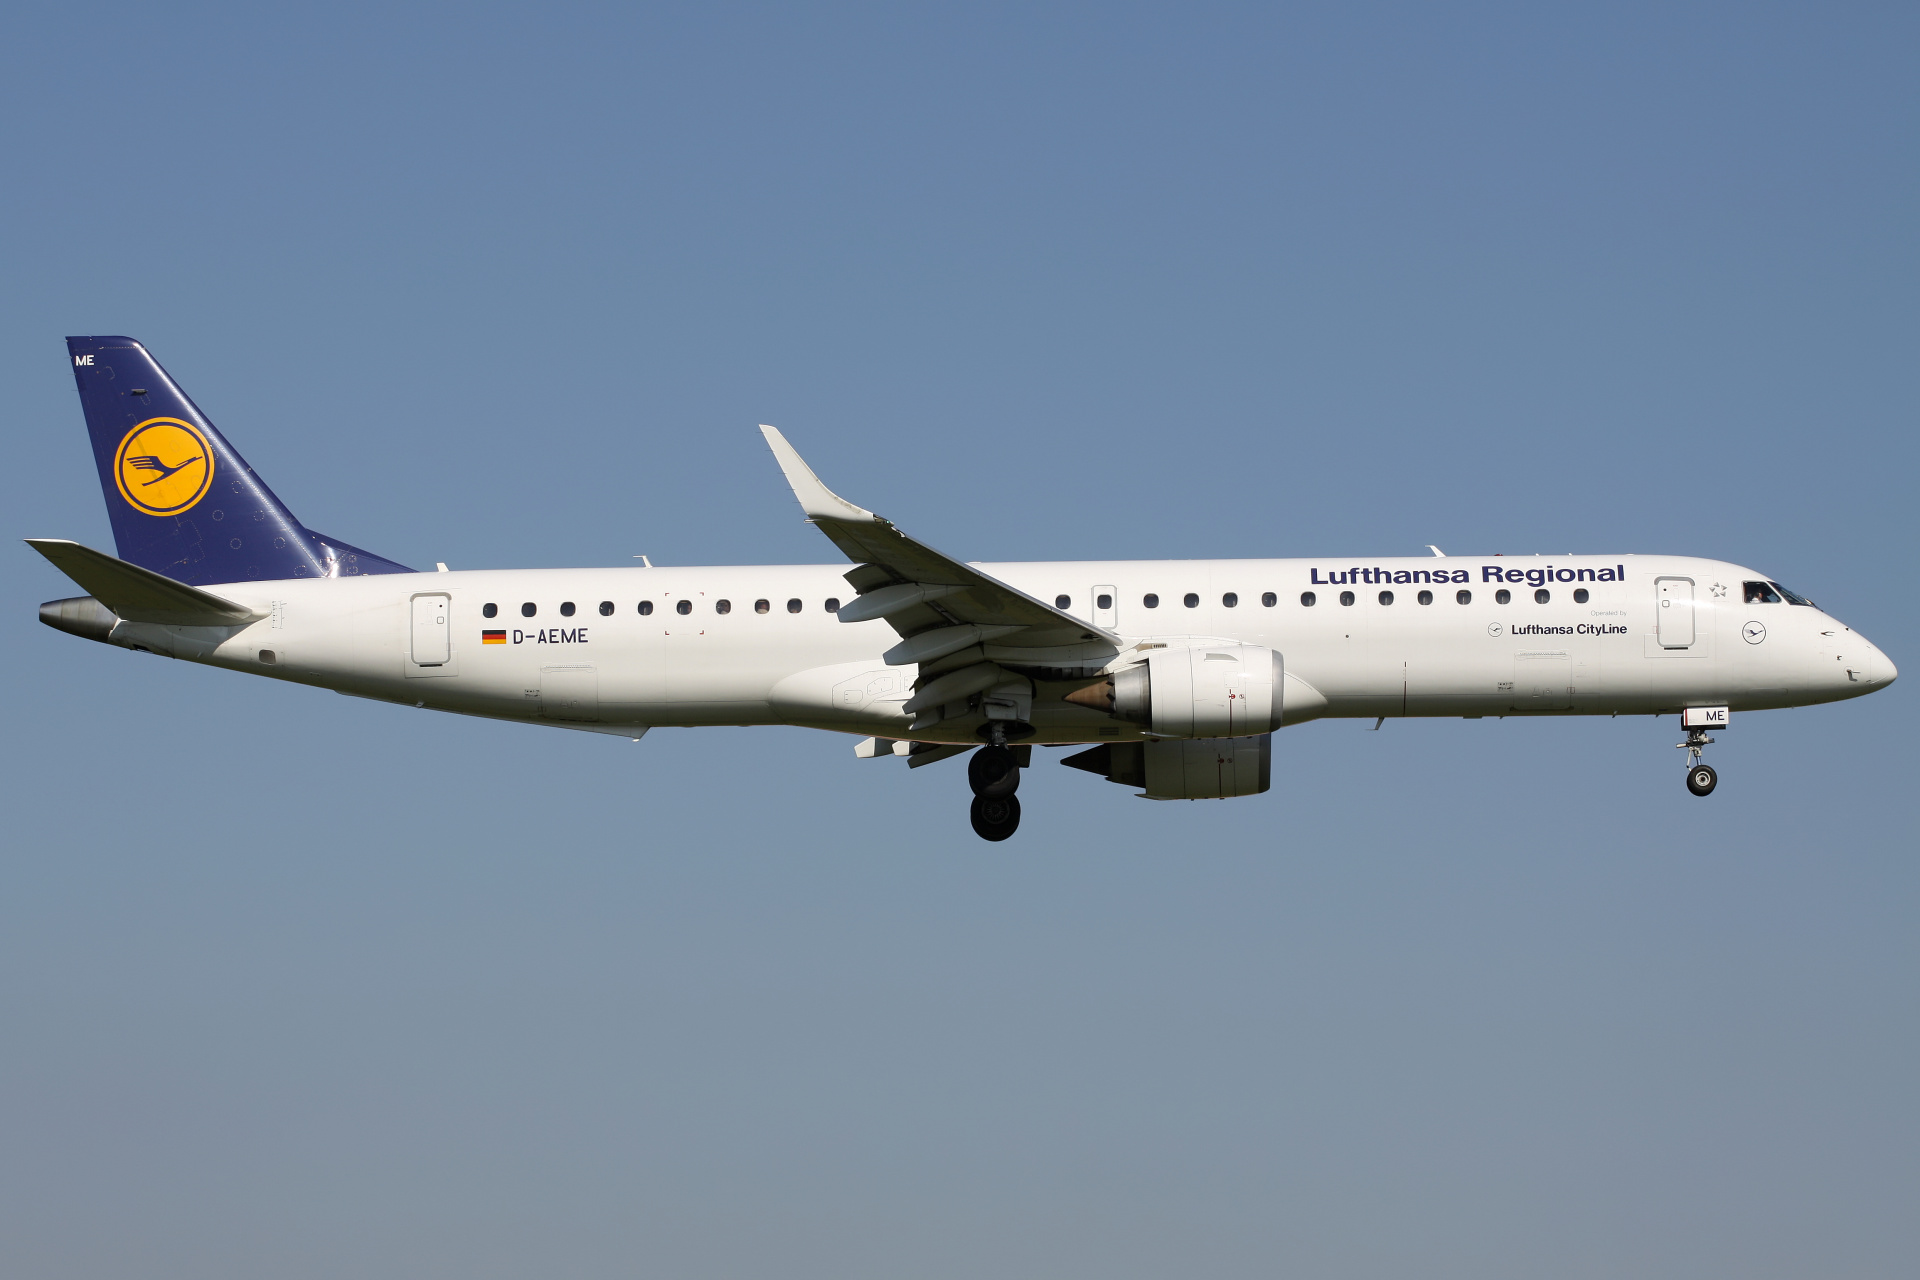 D-AEME (Lufthansa CityLine) (Aircraft » EPWA Spotting » Embraer E195 » Lufthansa Regional)